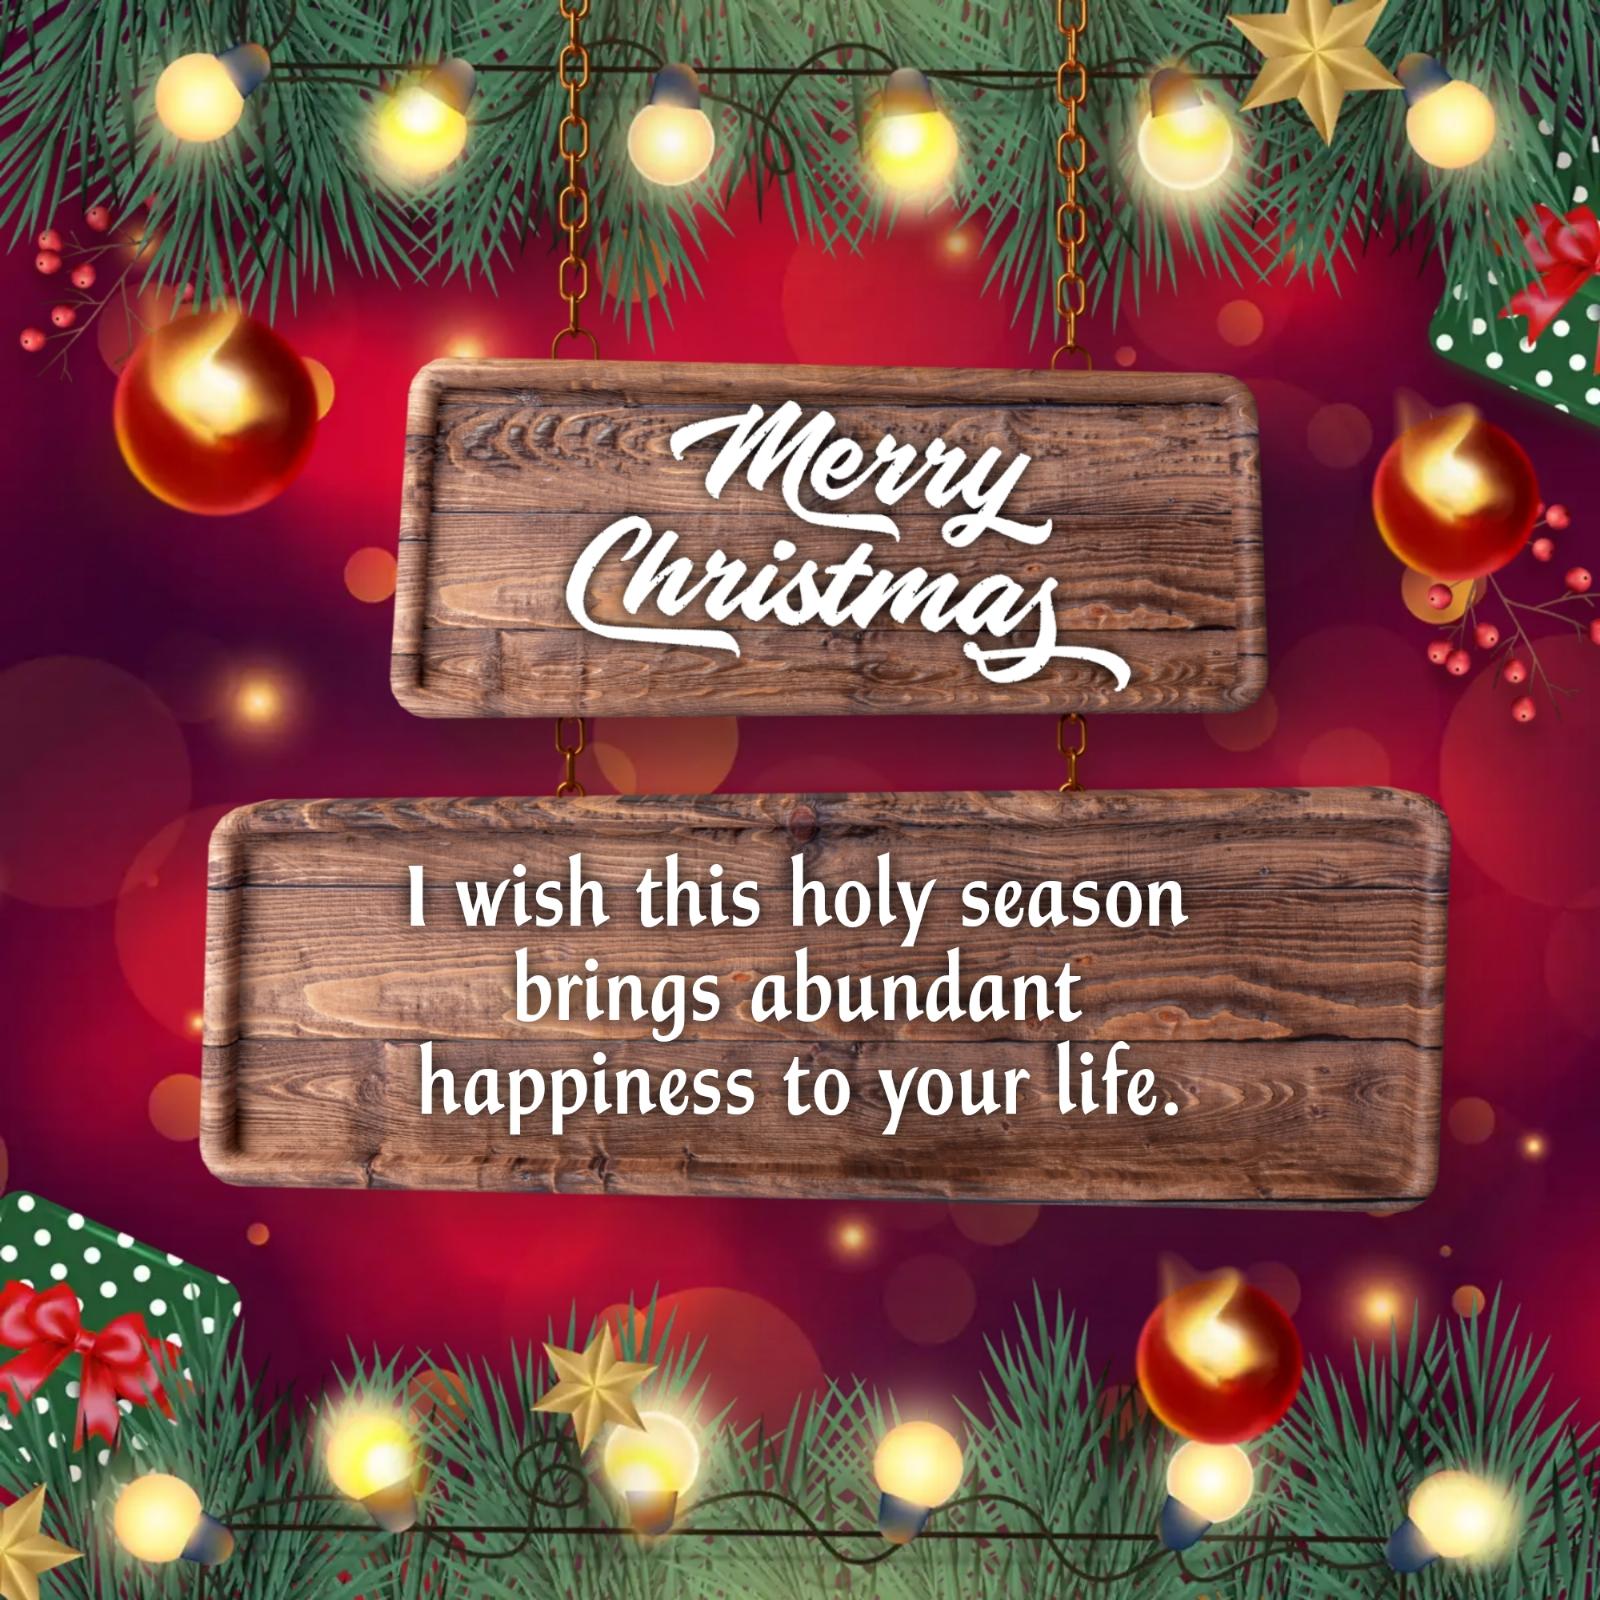 I wish this holy season brings abundant happiness to your life